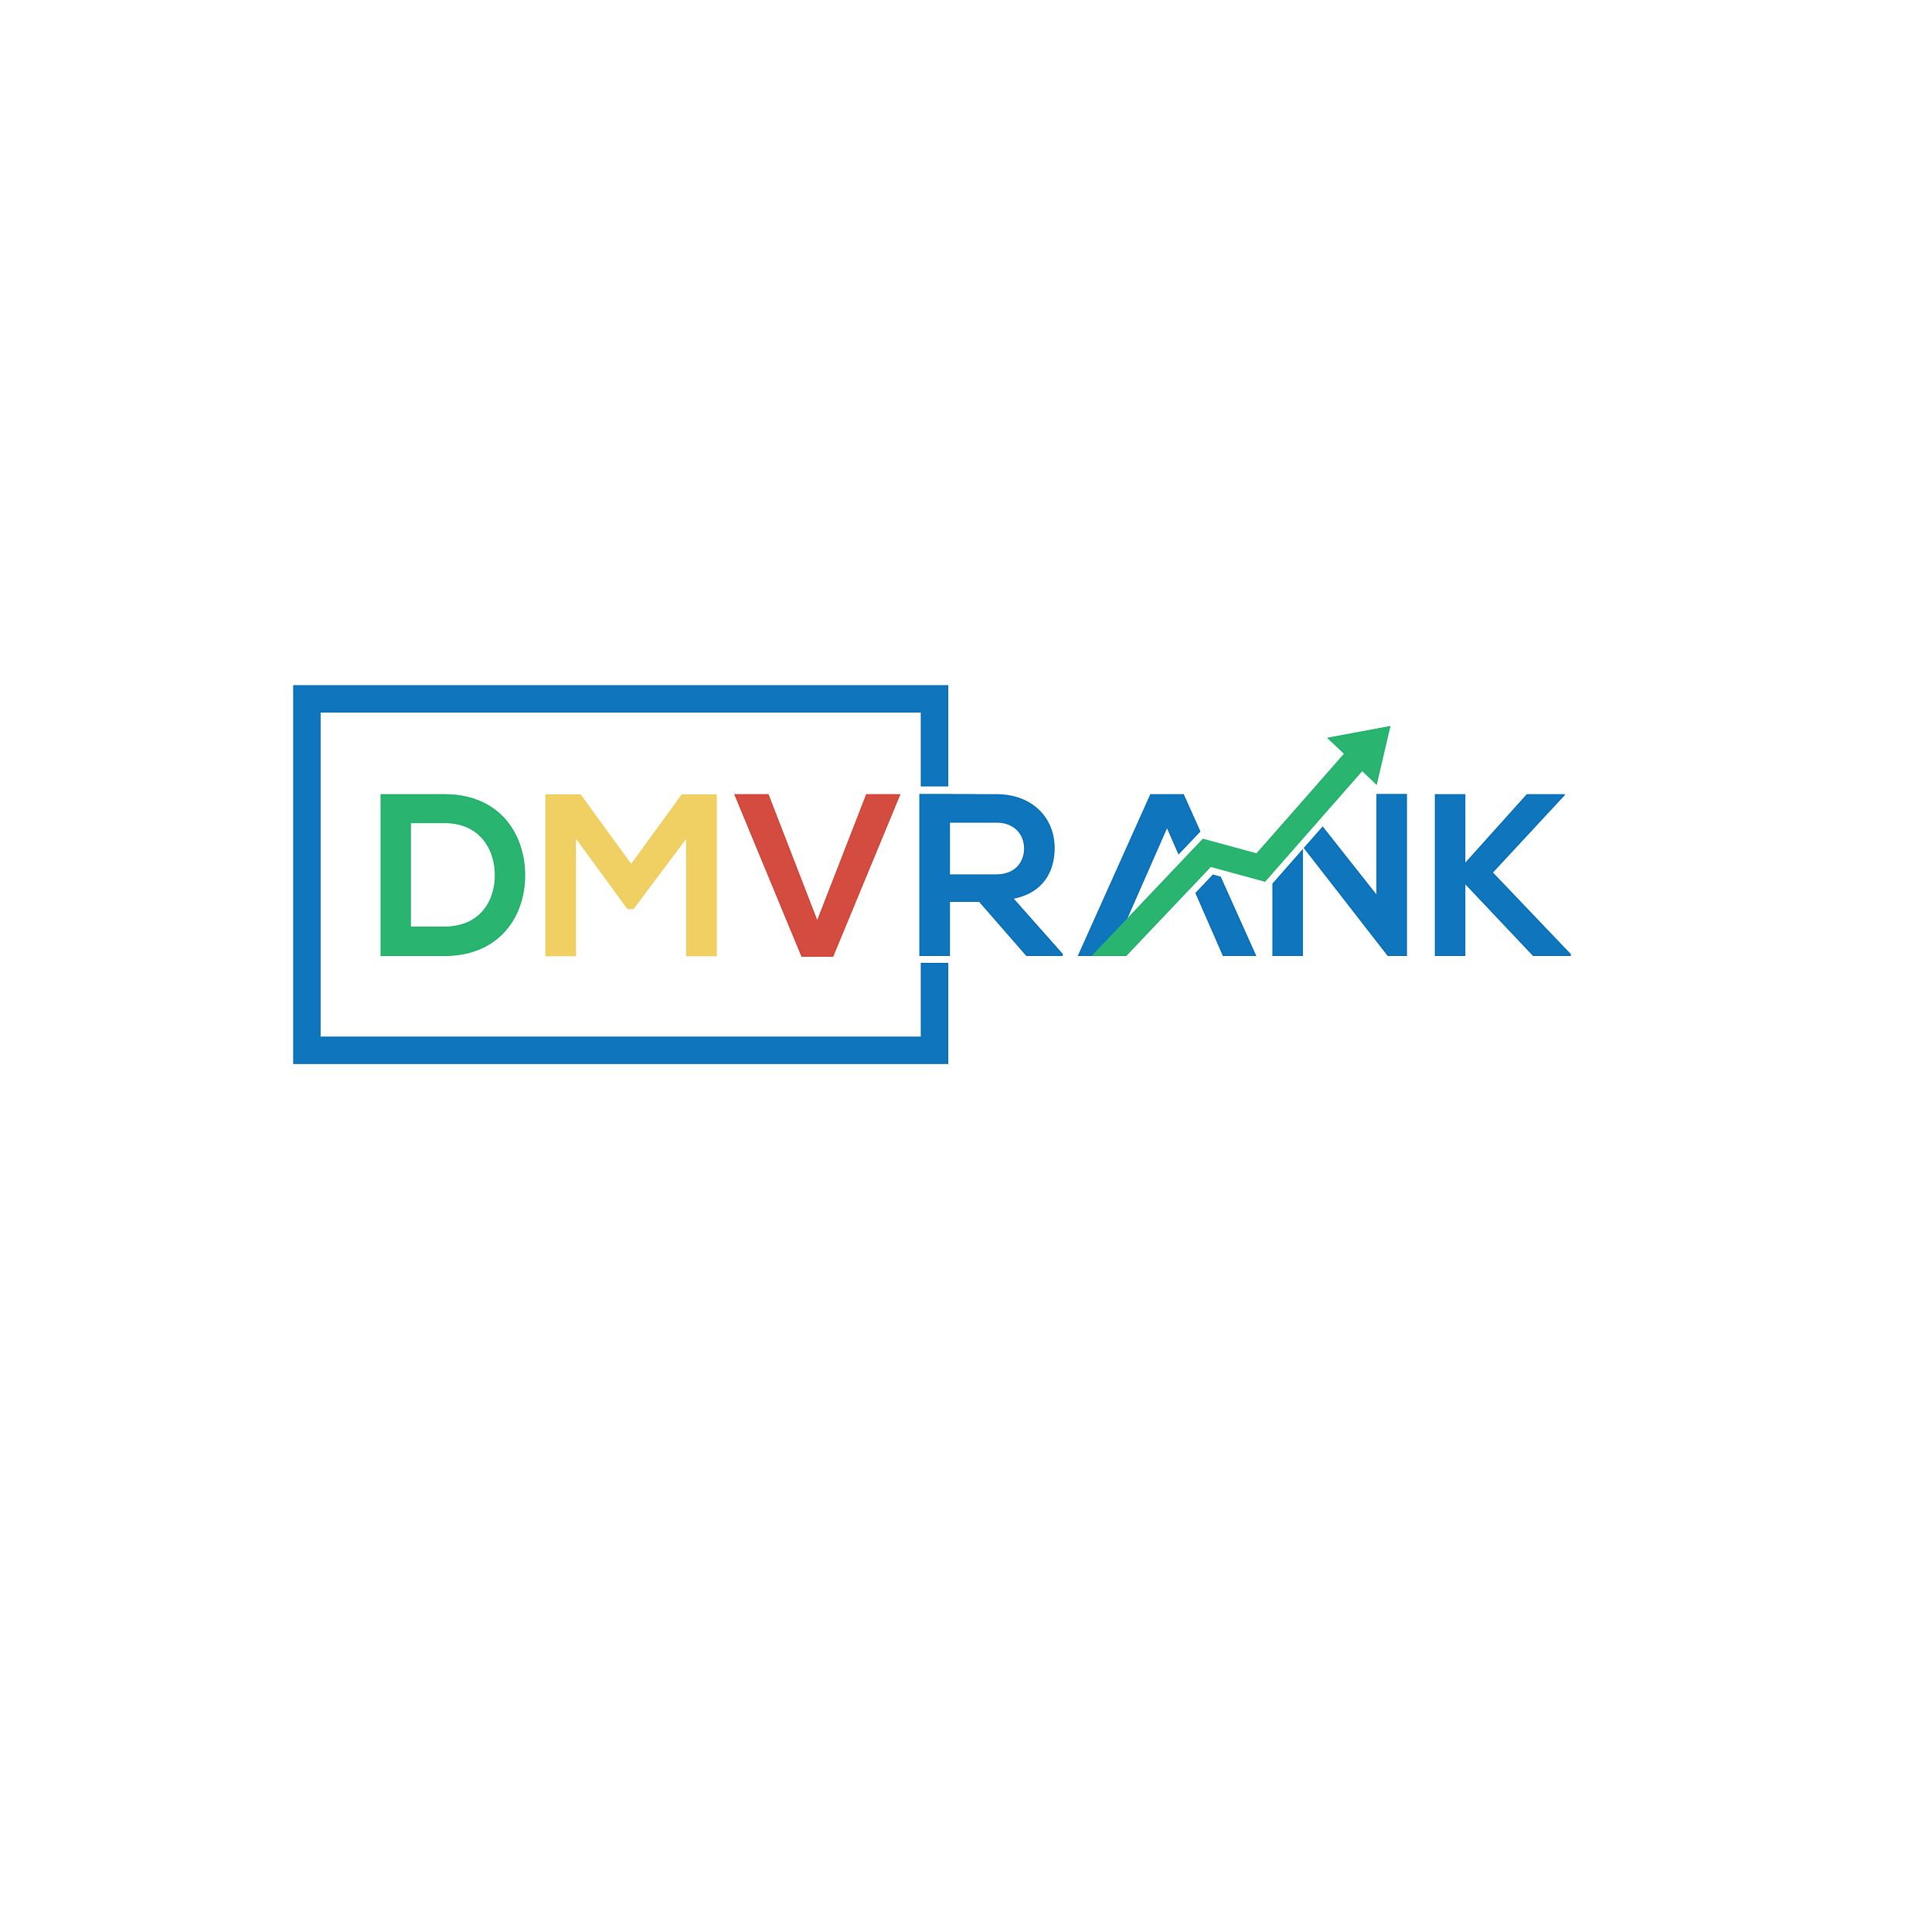 DMVRank profile on Qualified.One